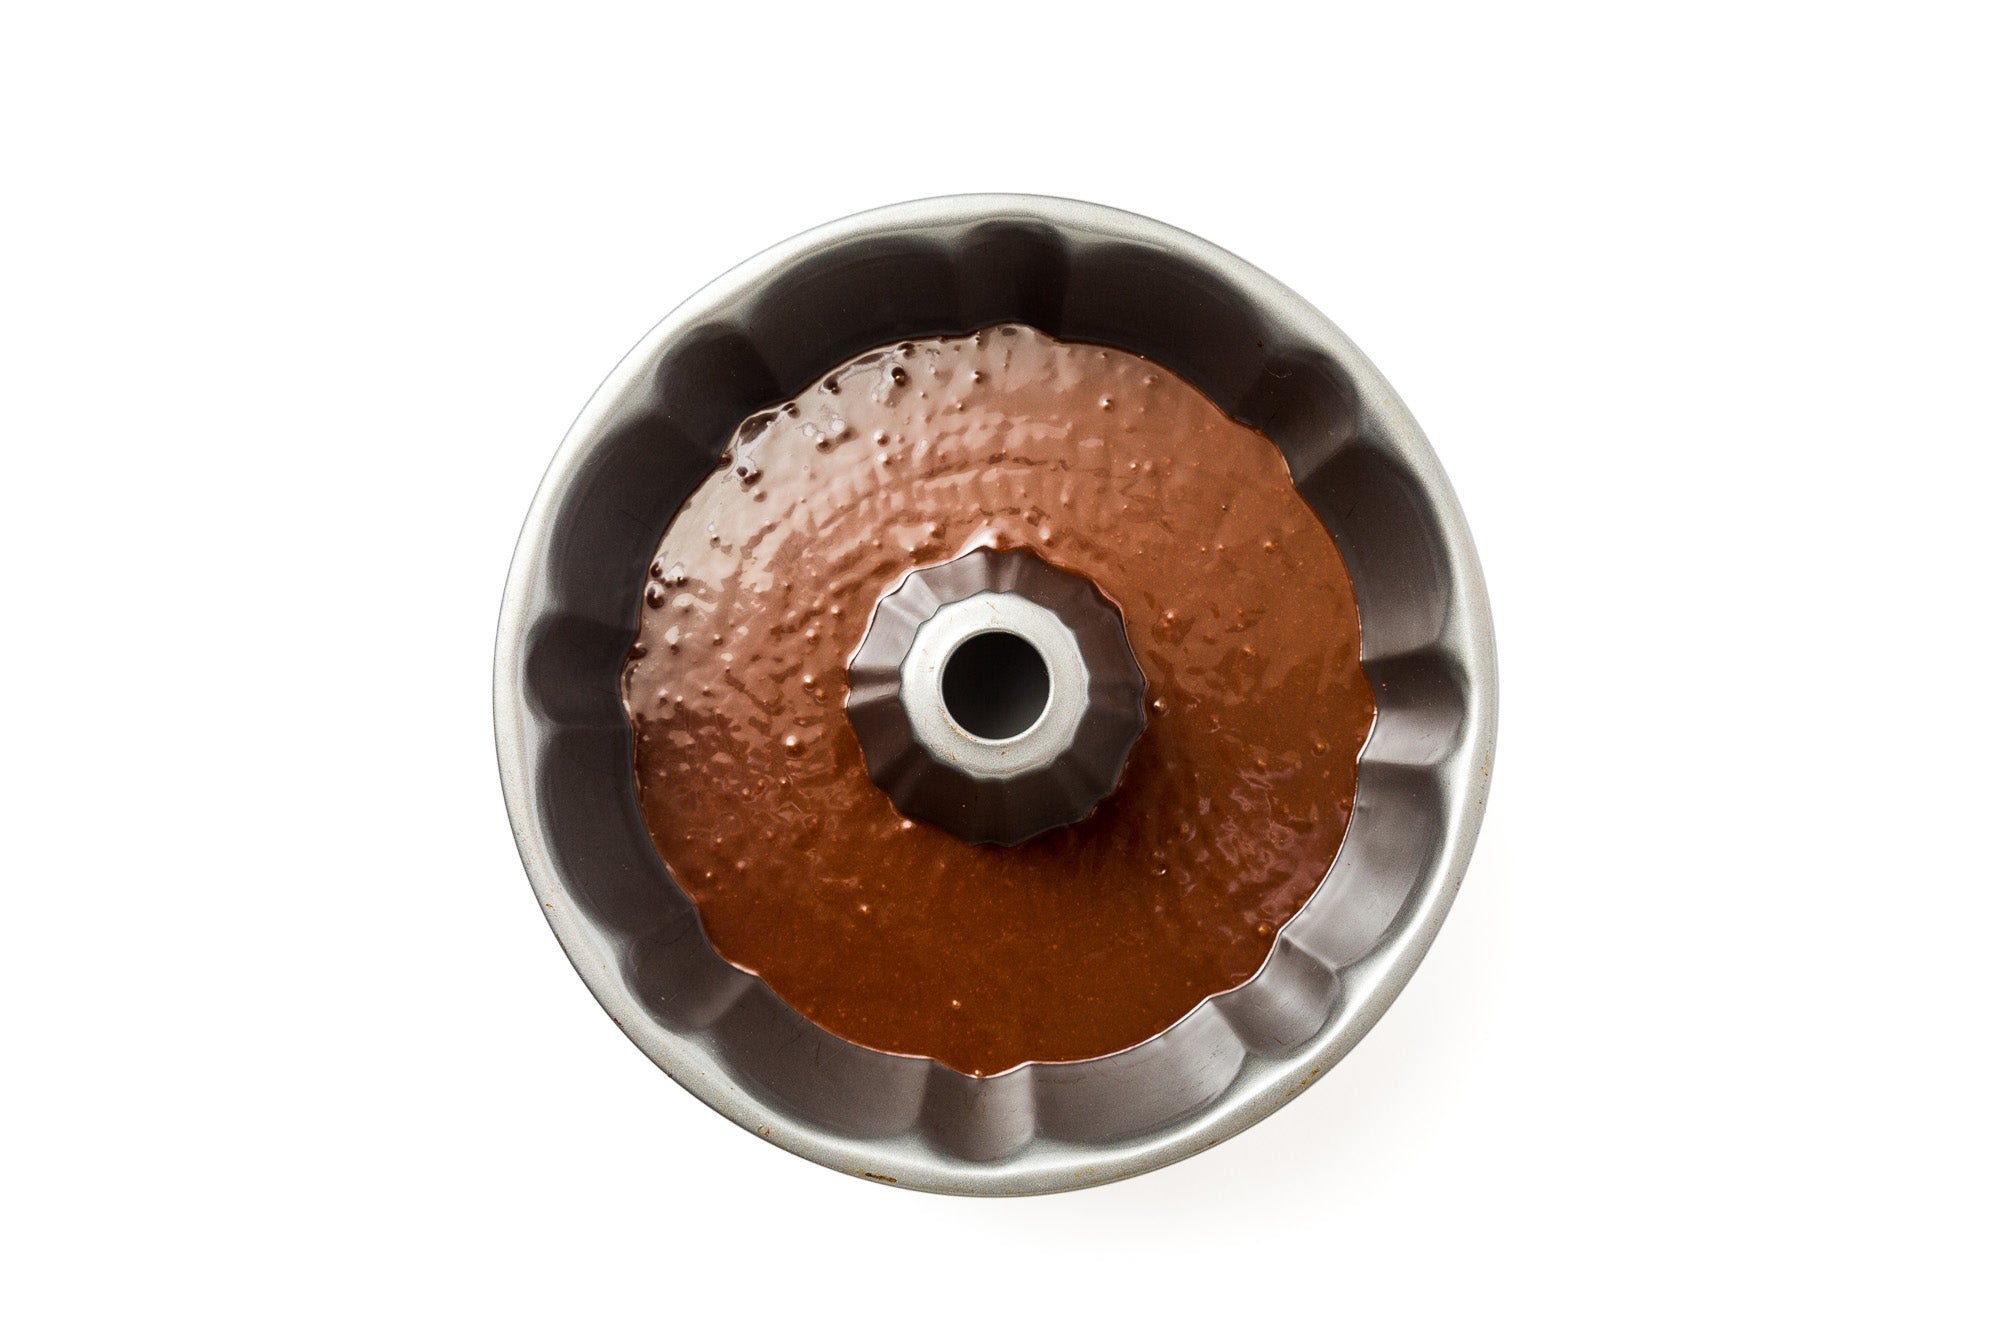 Image of batter in bundt cake pan used for Miss Jones Baking Co Chocolate Almond Butter Bundt Cake recipe